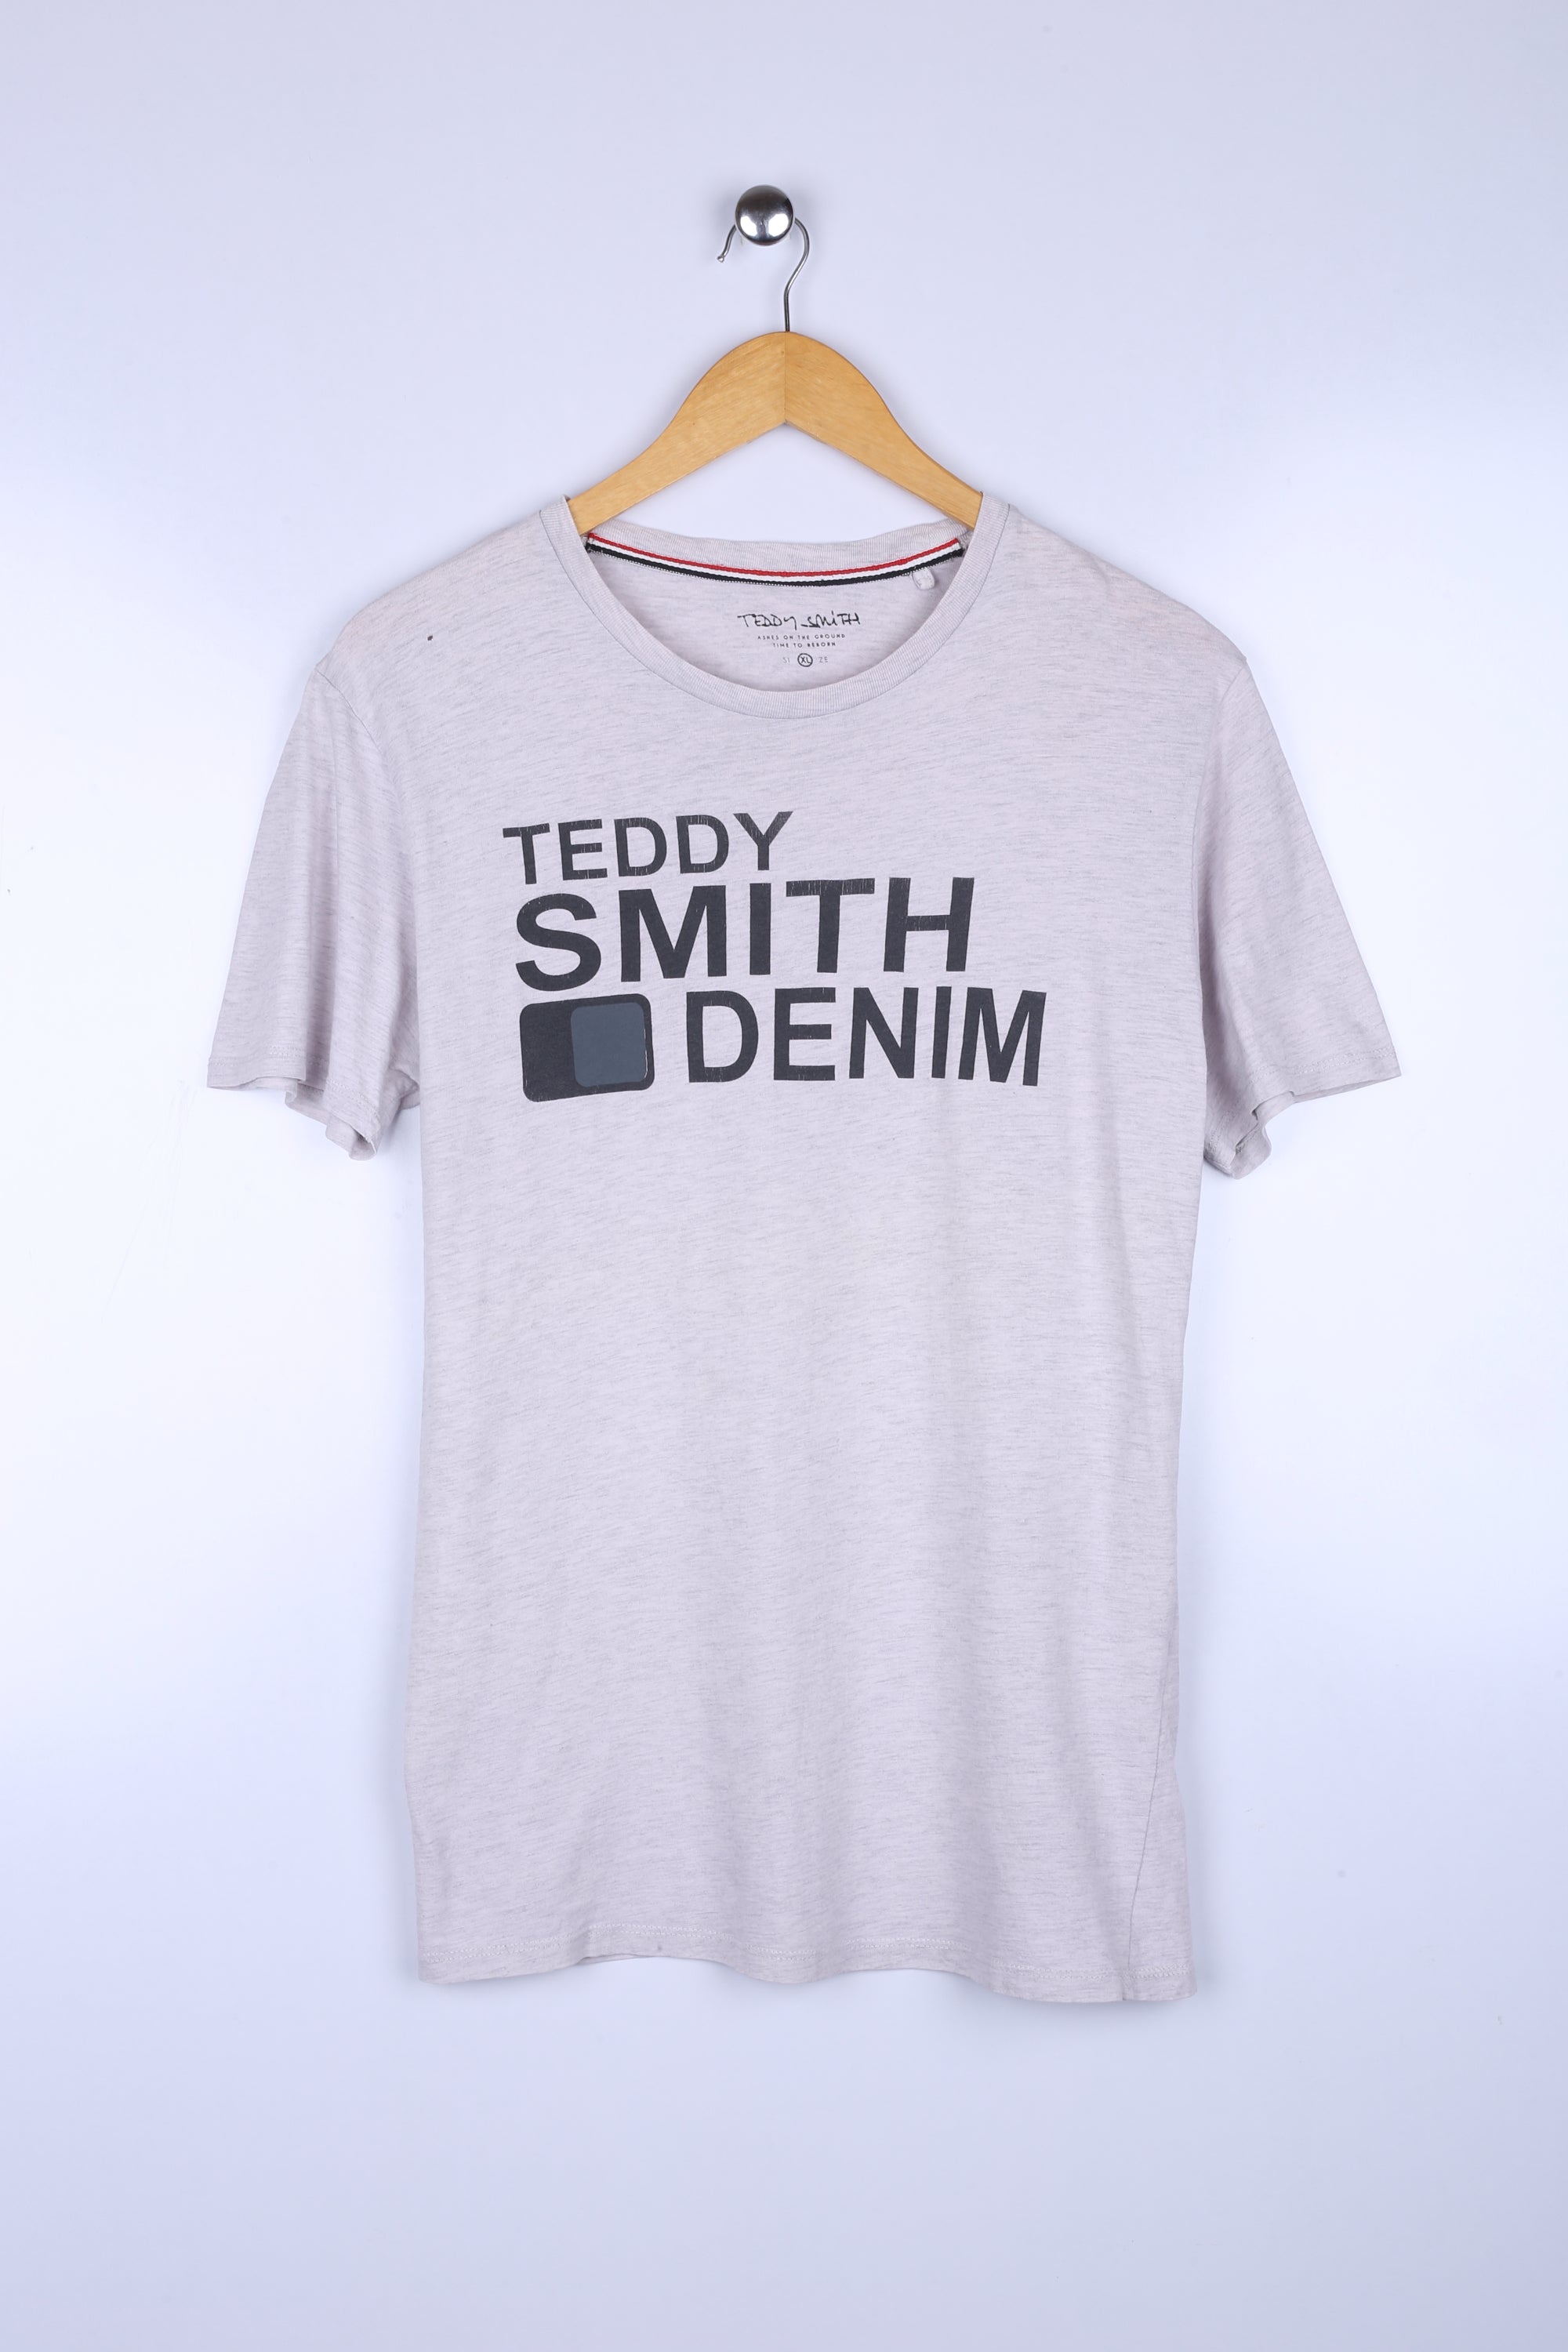 Vintage Teddy Smith Tee Grey